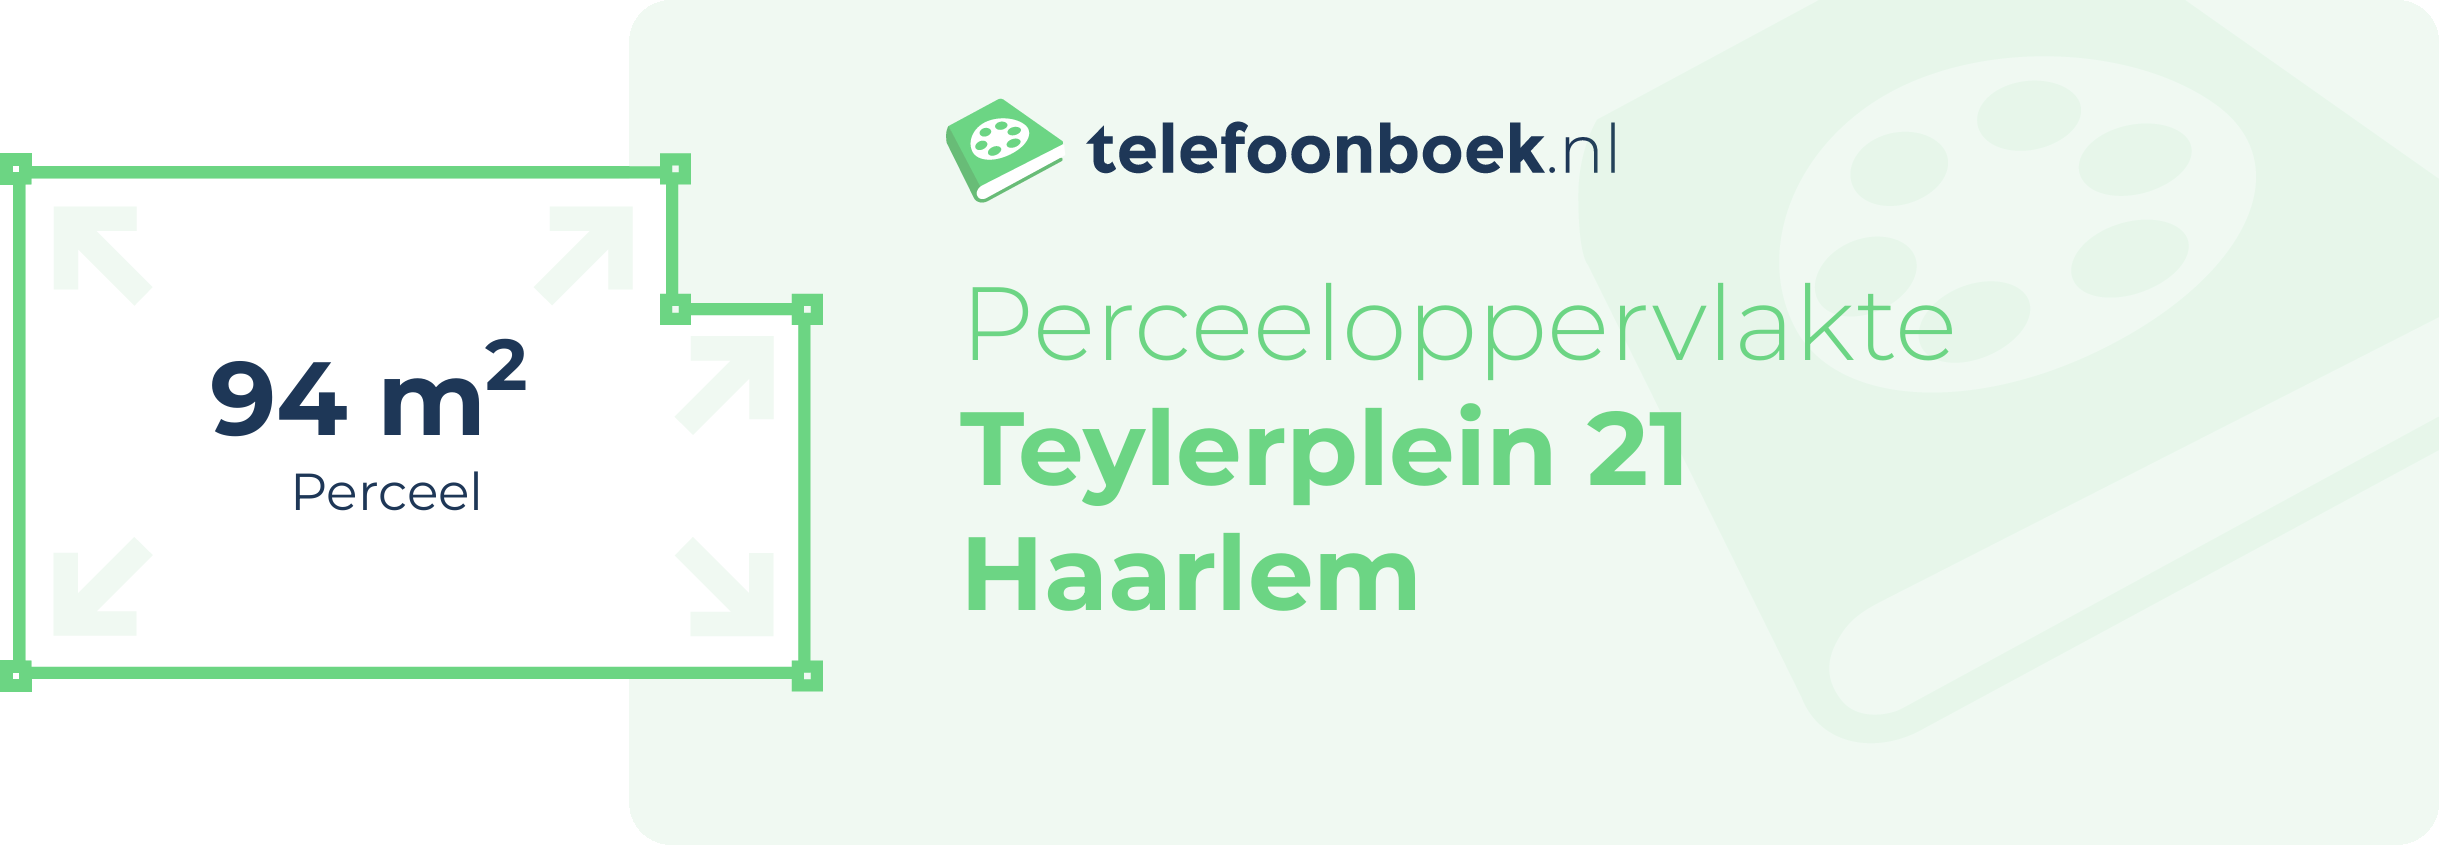 Perceeloppervlakte Teylerplein 21 Haarlem